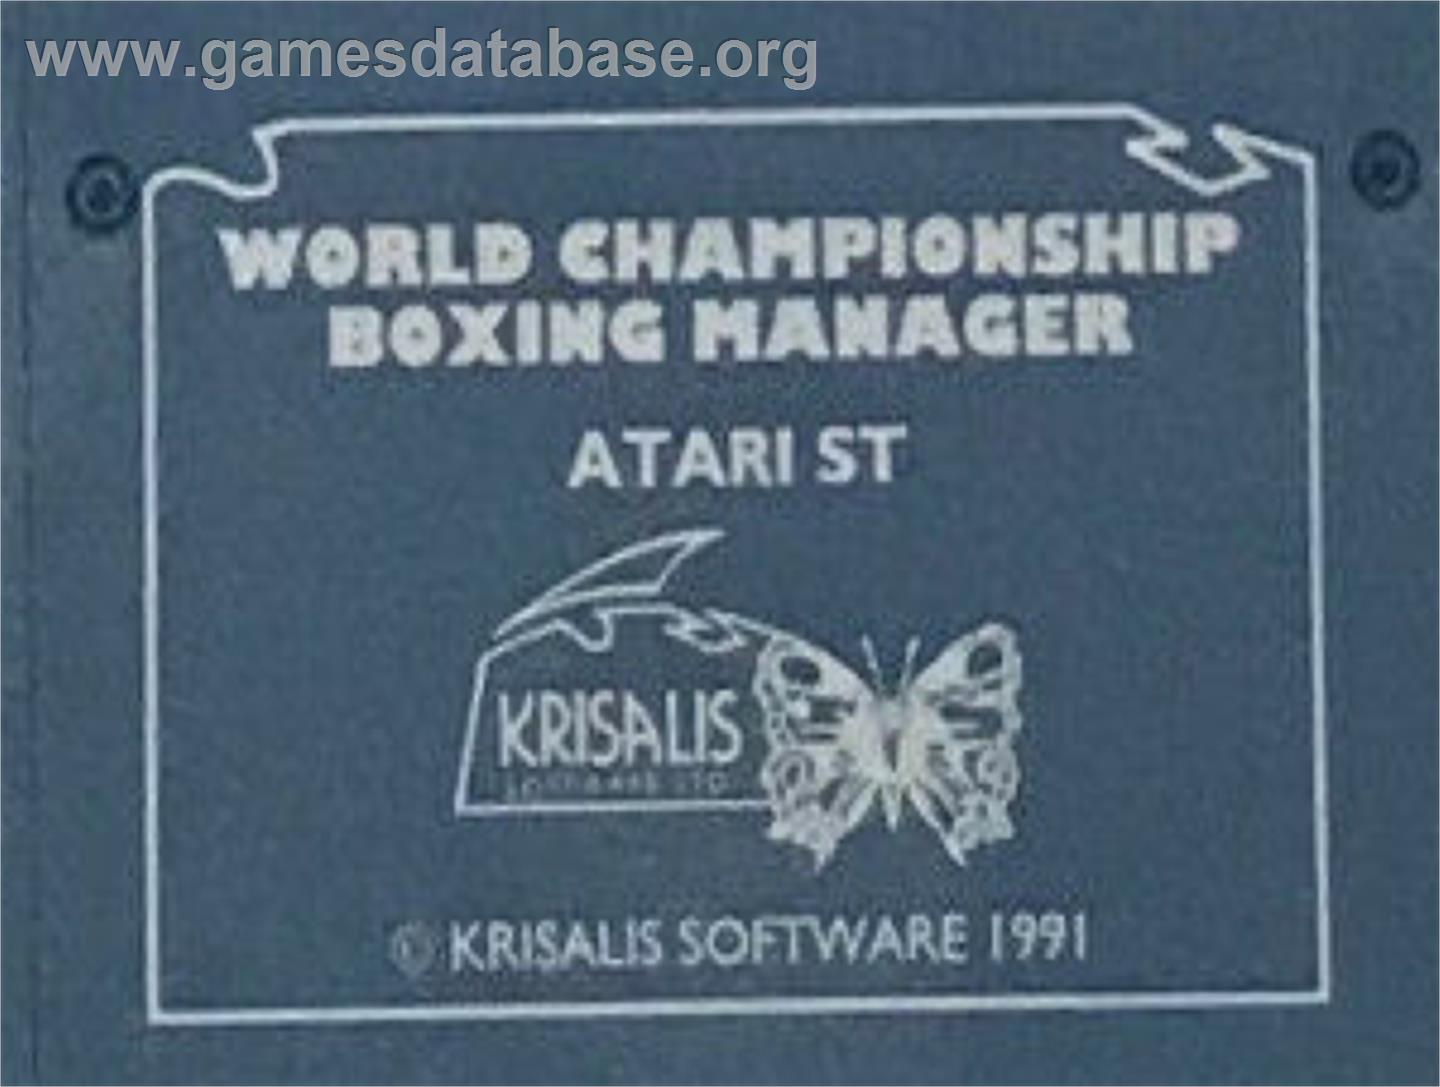 World Championship Boxing Manager - Atari ST - Artwork - Cartridge Top